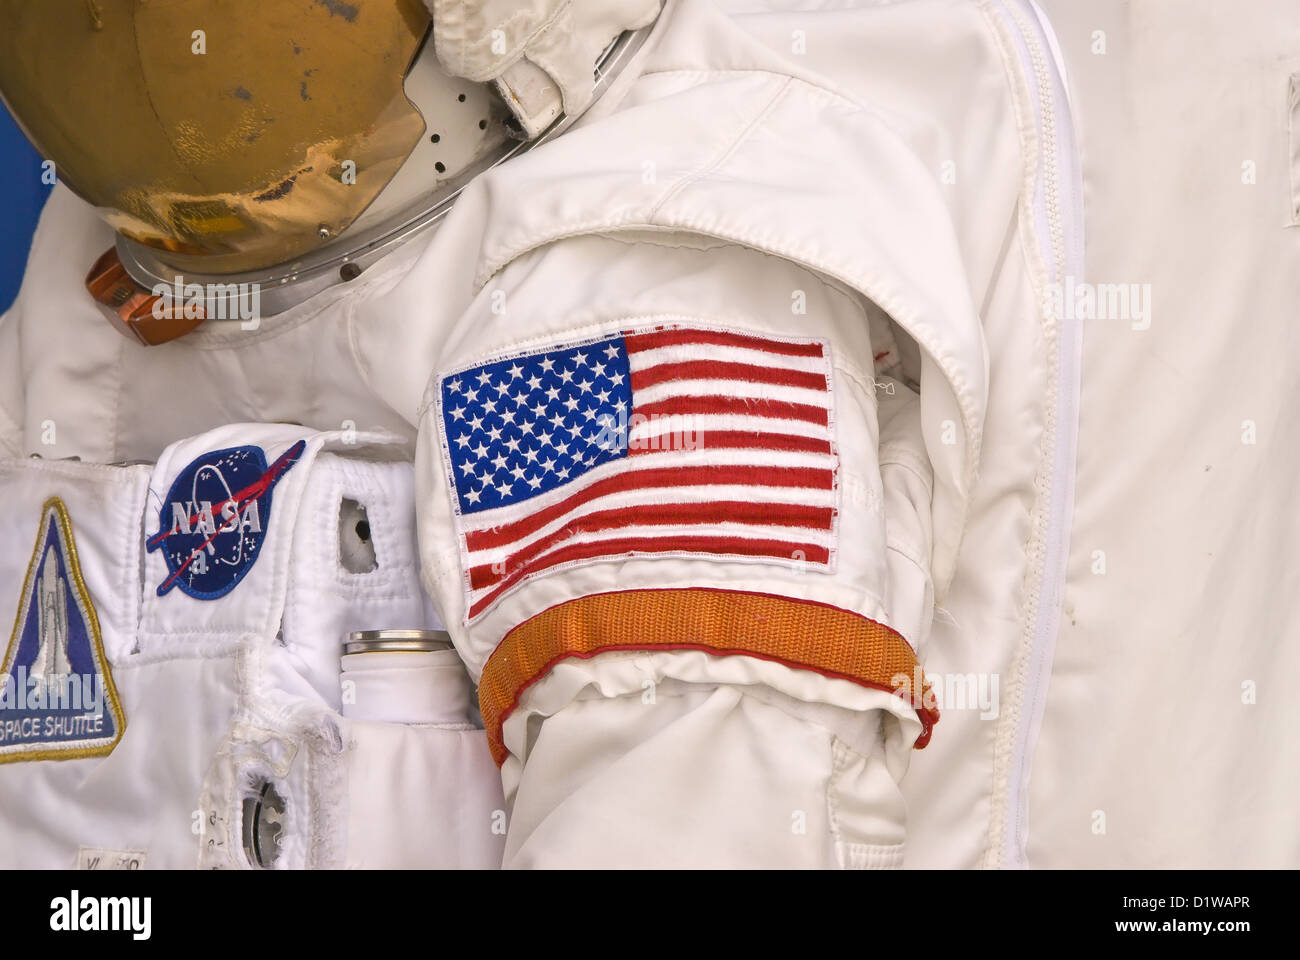 NASA Astronaut Raumanzug mit amerikanische Flagge Arm Patch Kennedy Space Center Visitor Center, Florida Stockfoto